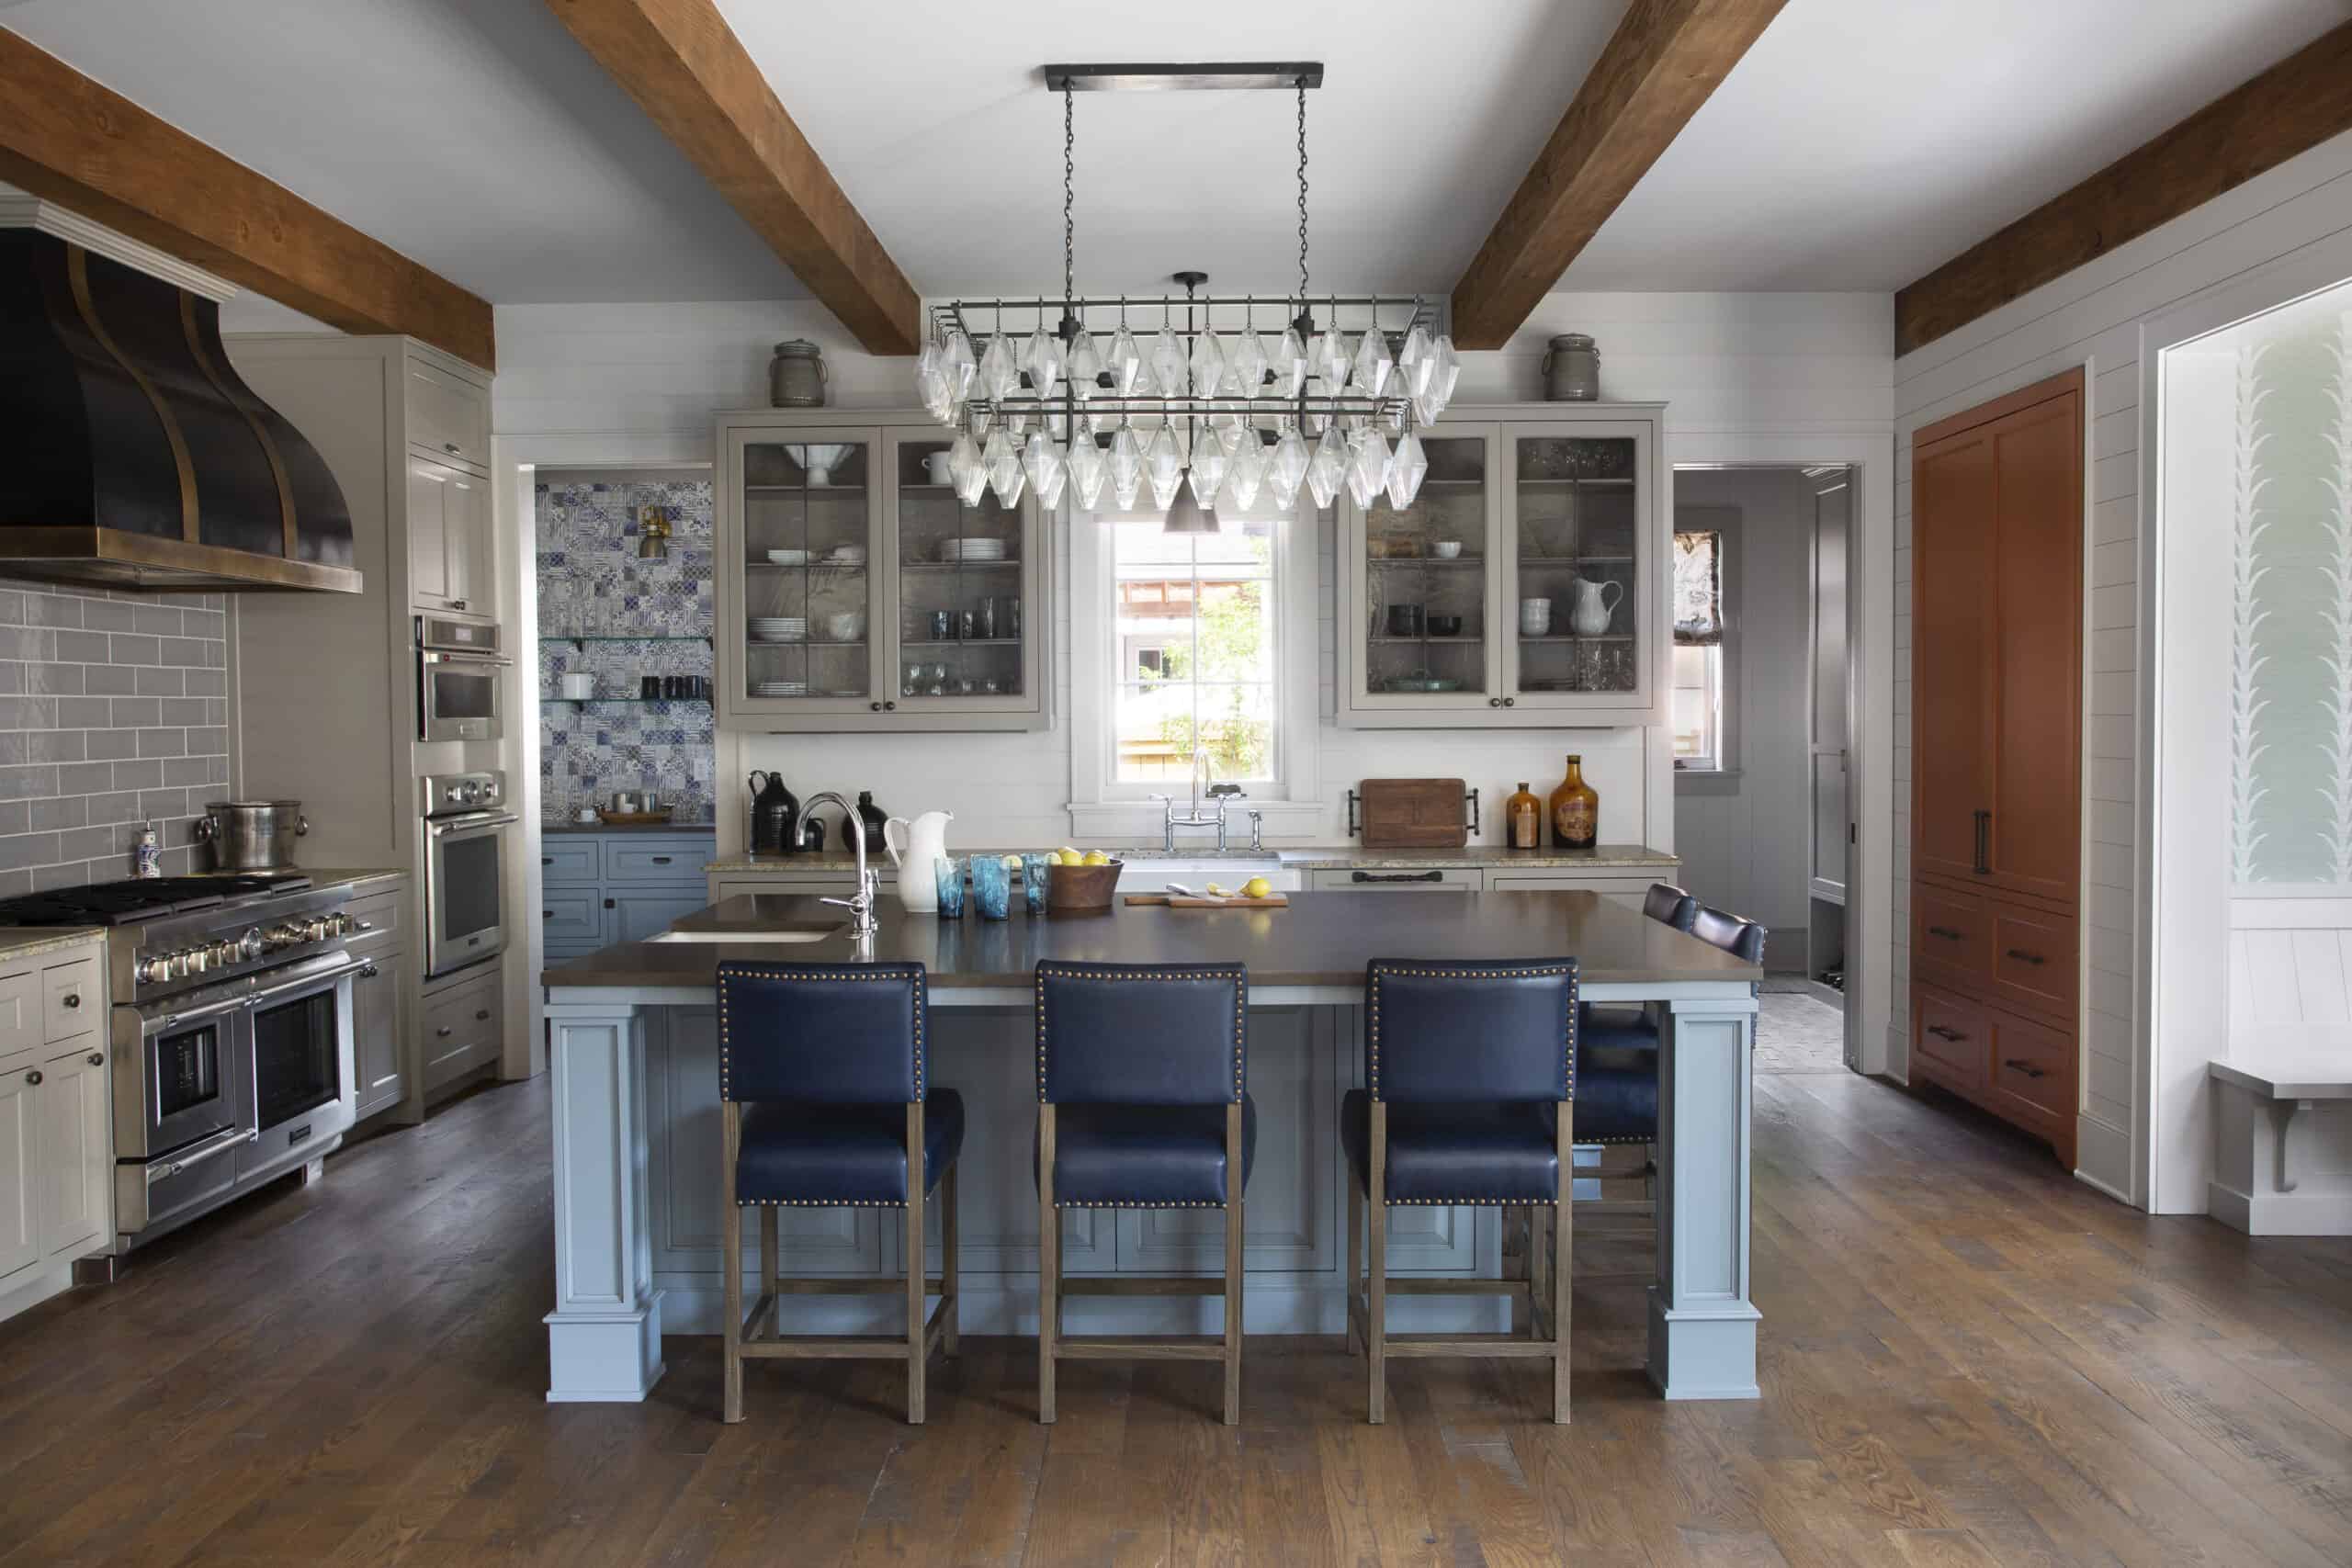 Kitchen with blue chairs. Duet Design Group Denver Colorado Interior Design